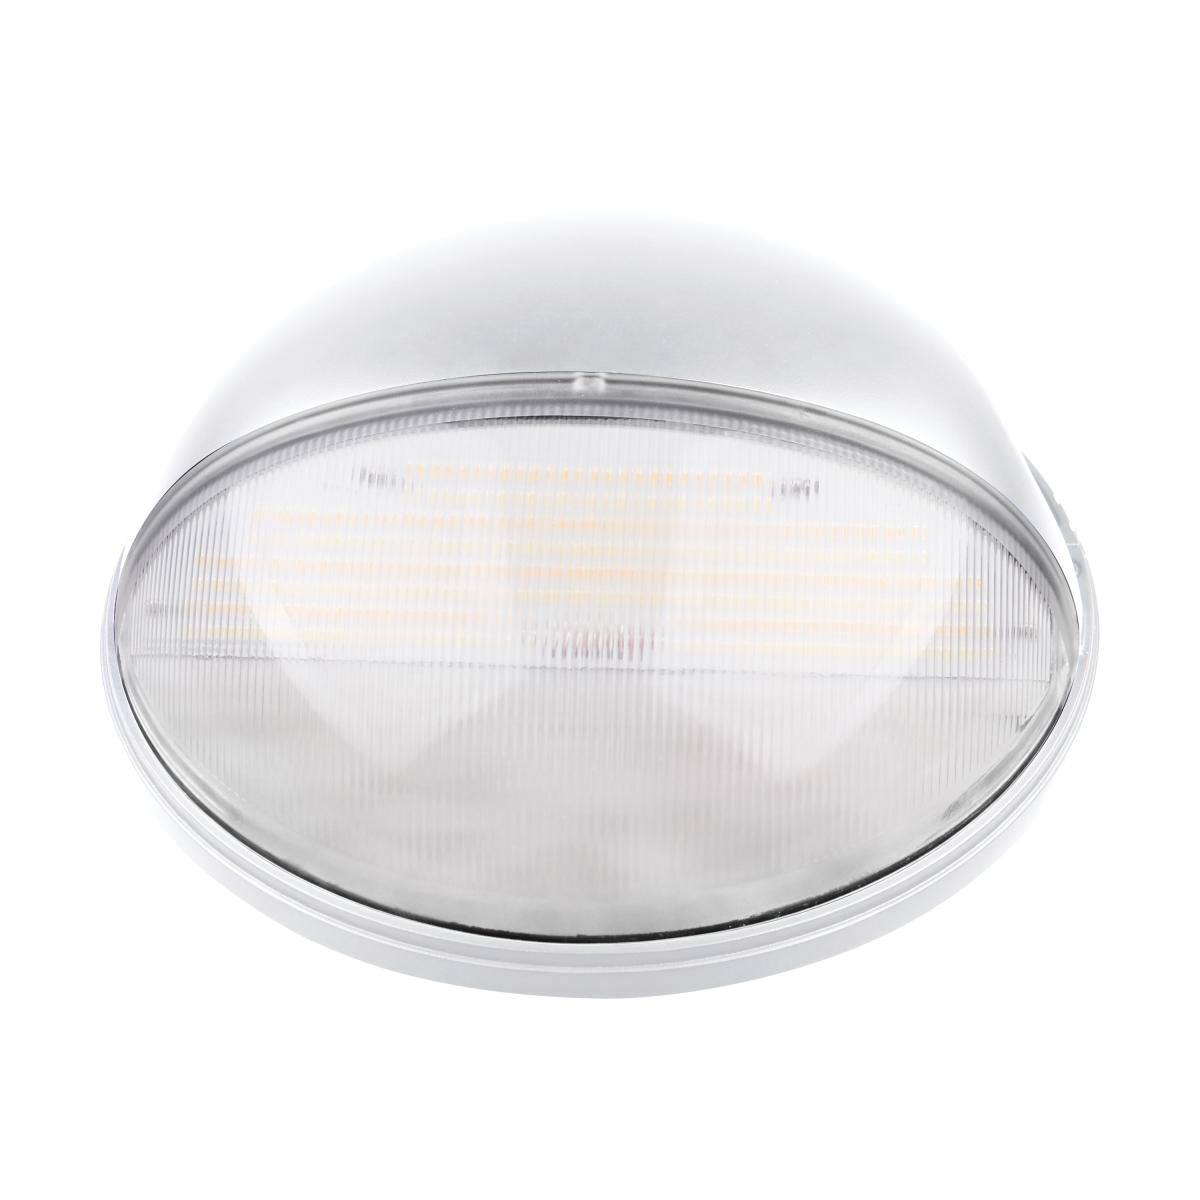 Nuvo Lighting 65-752 Small Round Wall Pack, 120 to 277 V, 20 W, LED Lamp, 100 deg Beam, 2600 to 2800 Lumens, 1/BX - 5